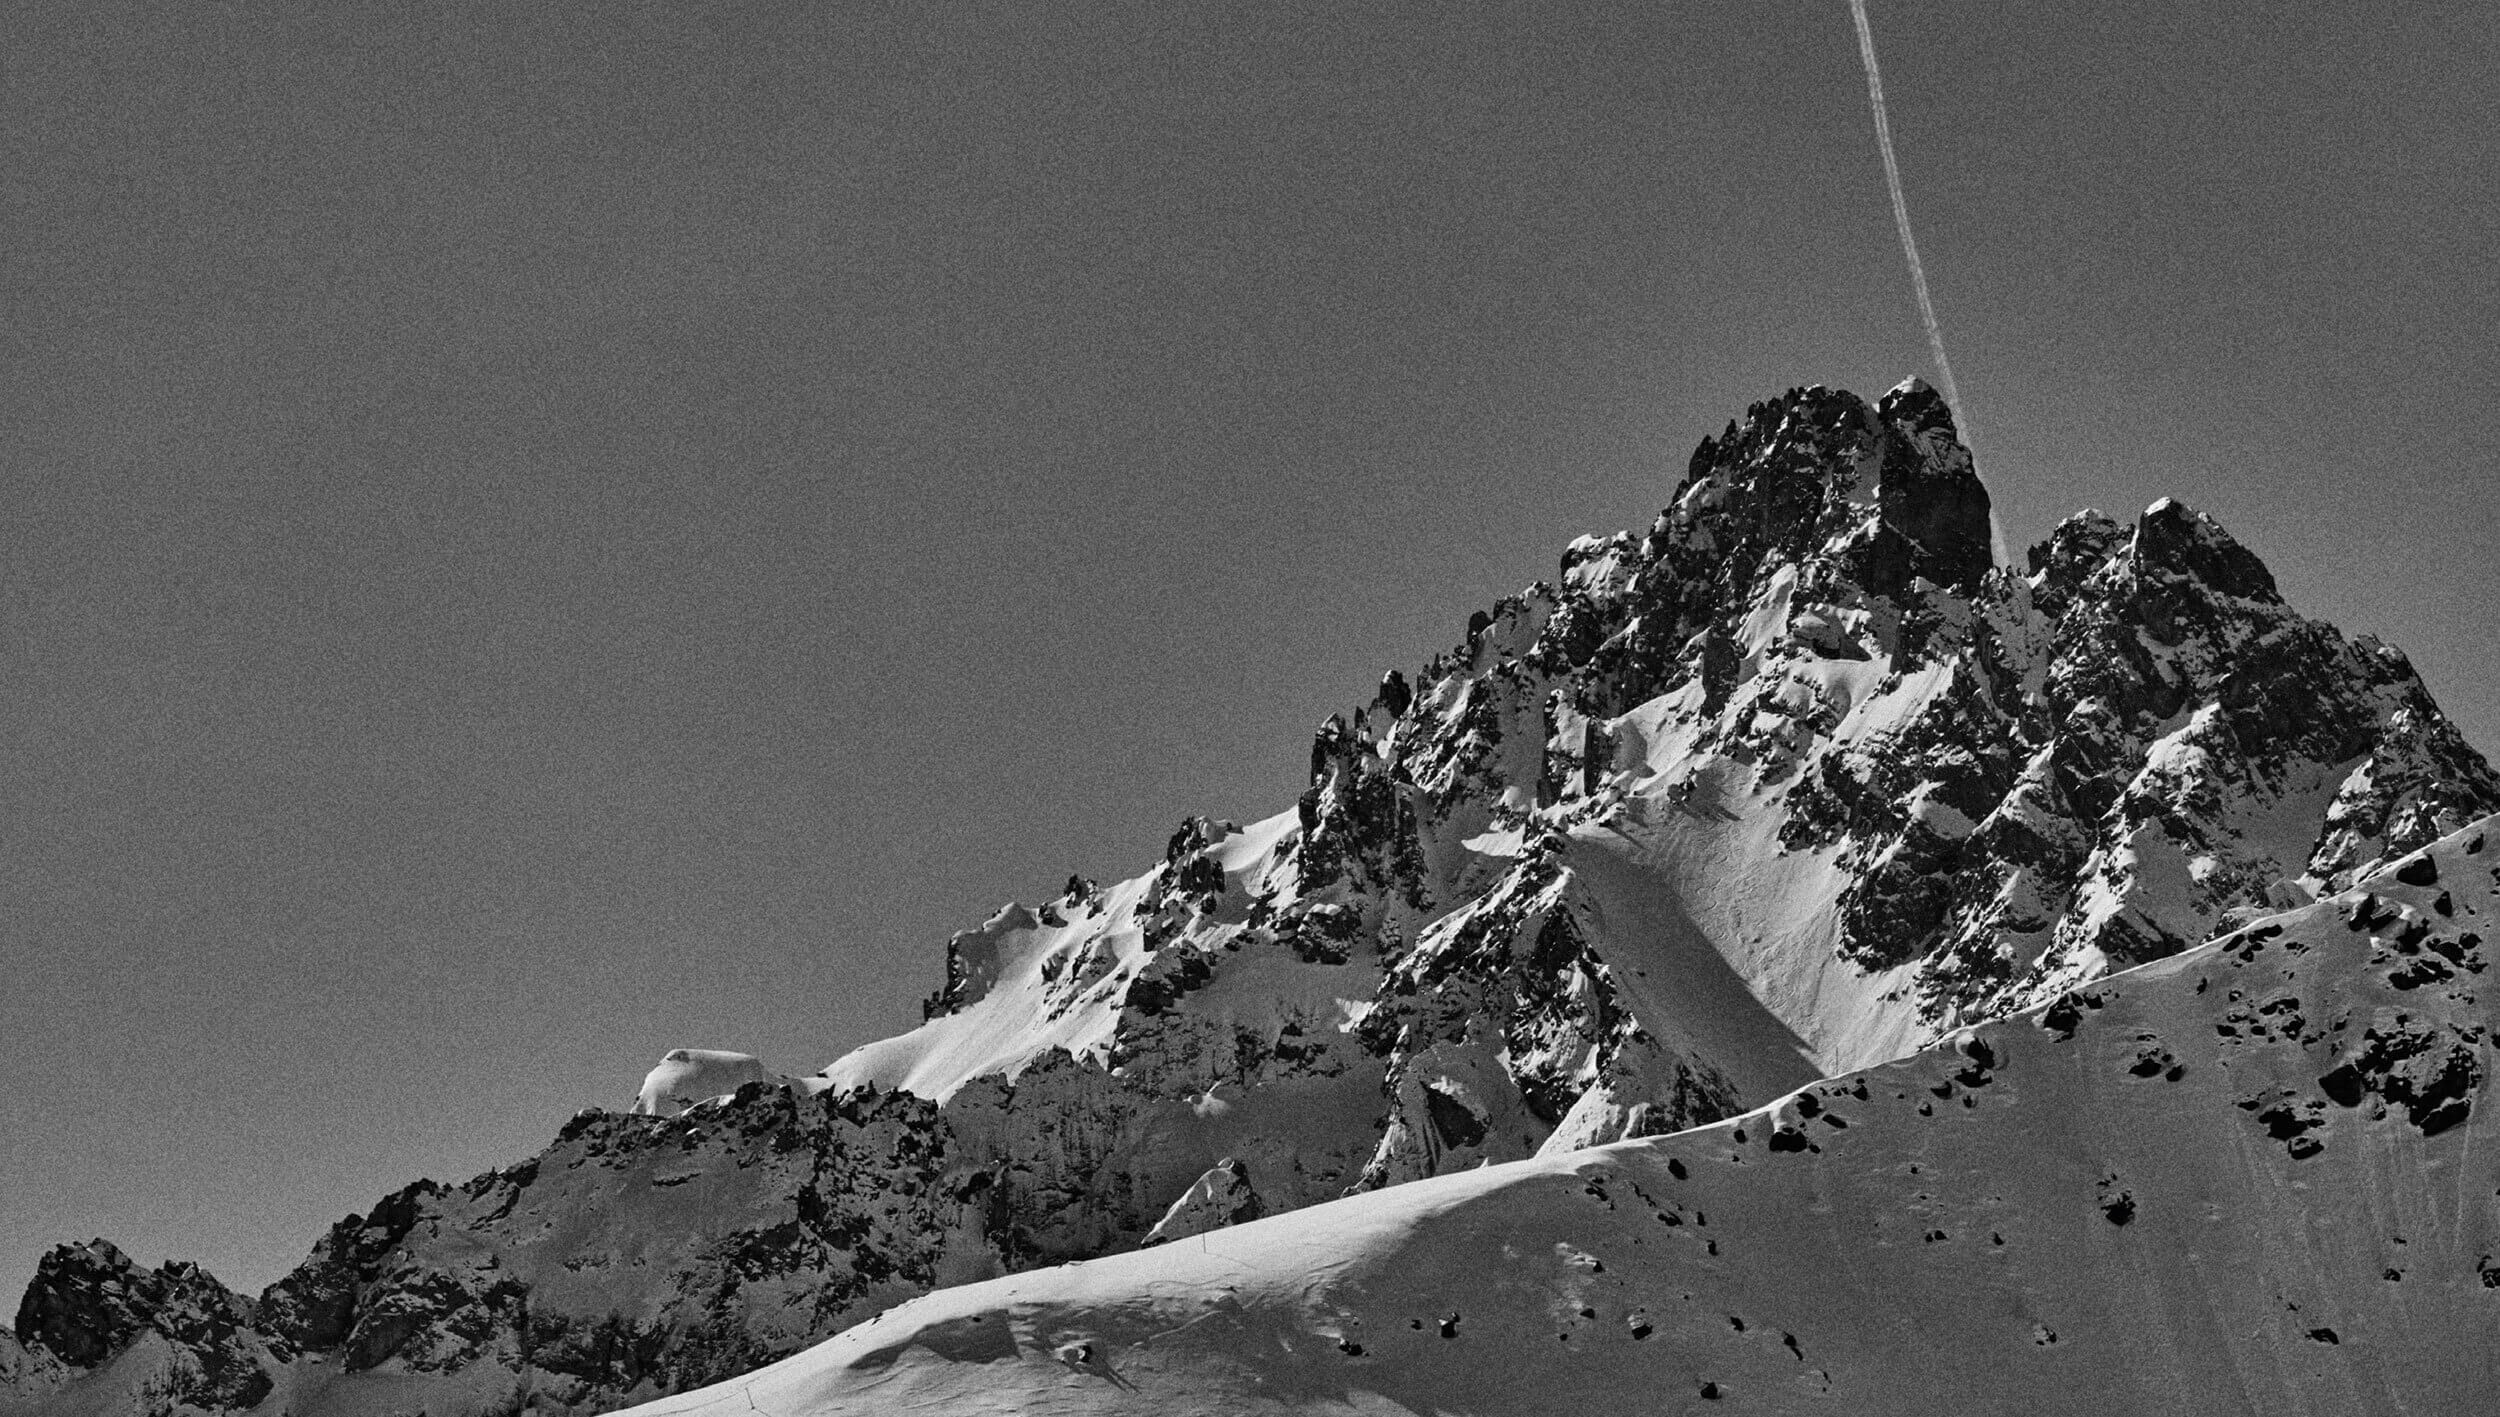 A photograph of an alpine mountain peak